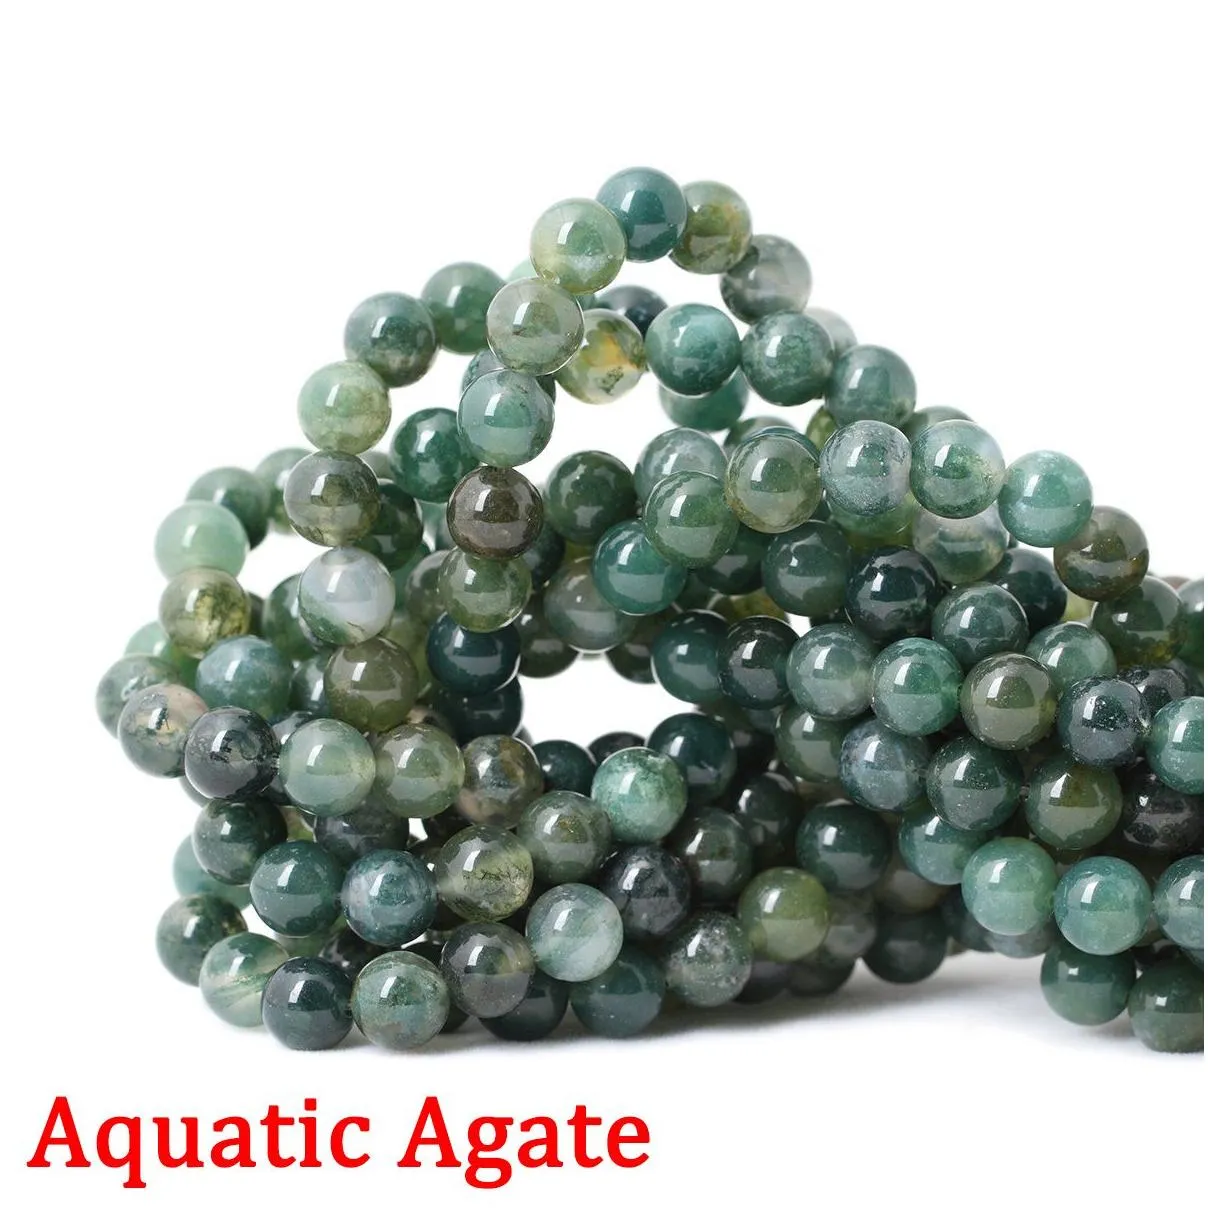 8mm natural stone loose beads jewelry making crystal energy stone healing quartz/aquamarine/amethyst/lapis/tiger/morgan diy necklace bracelet